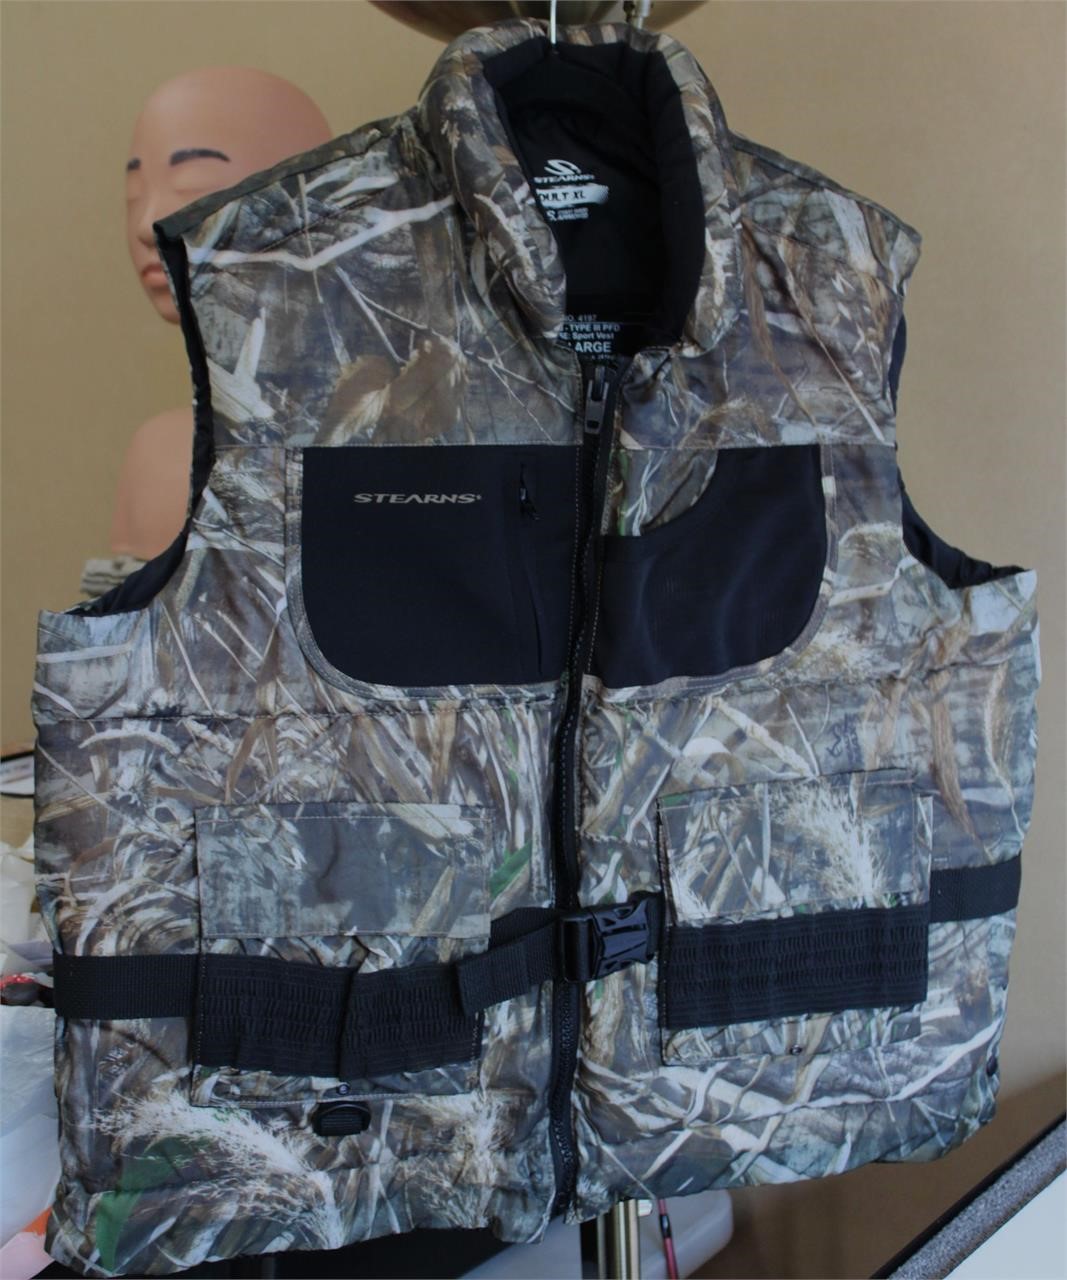 New Sterns Floatation Vest size XL